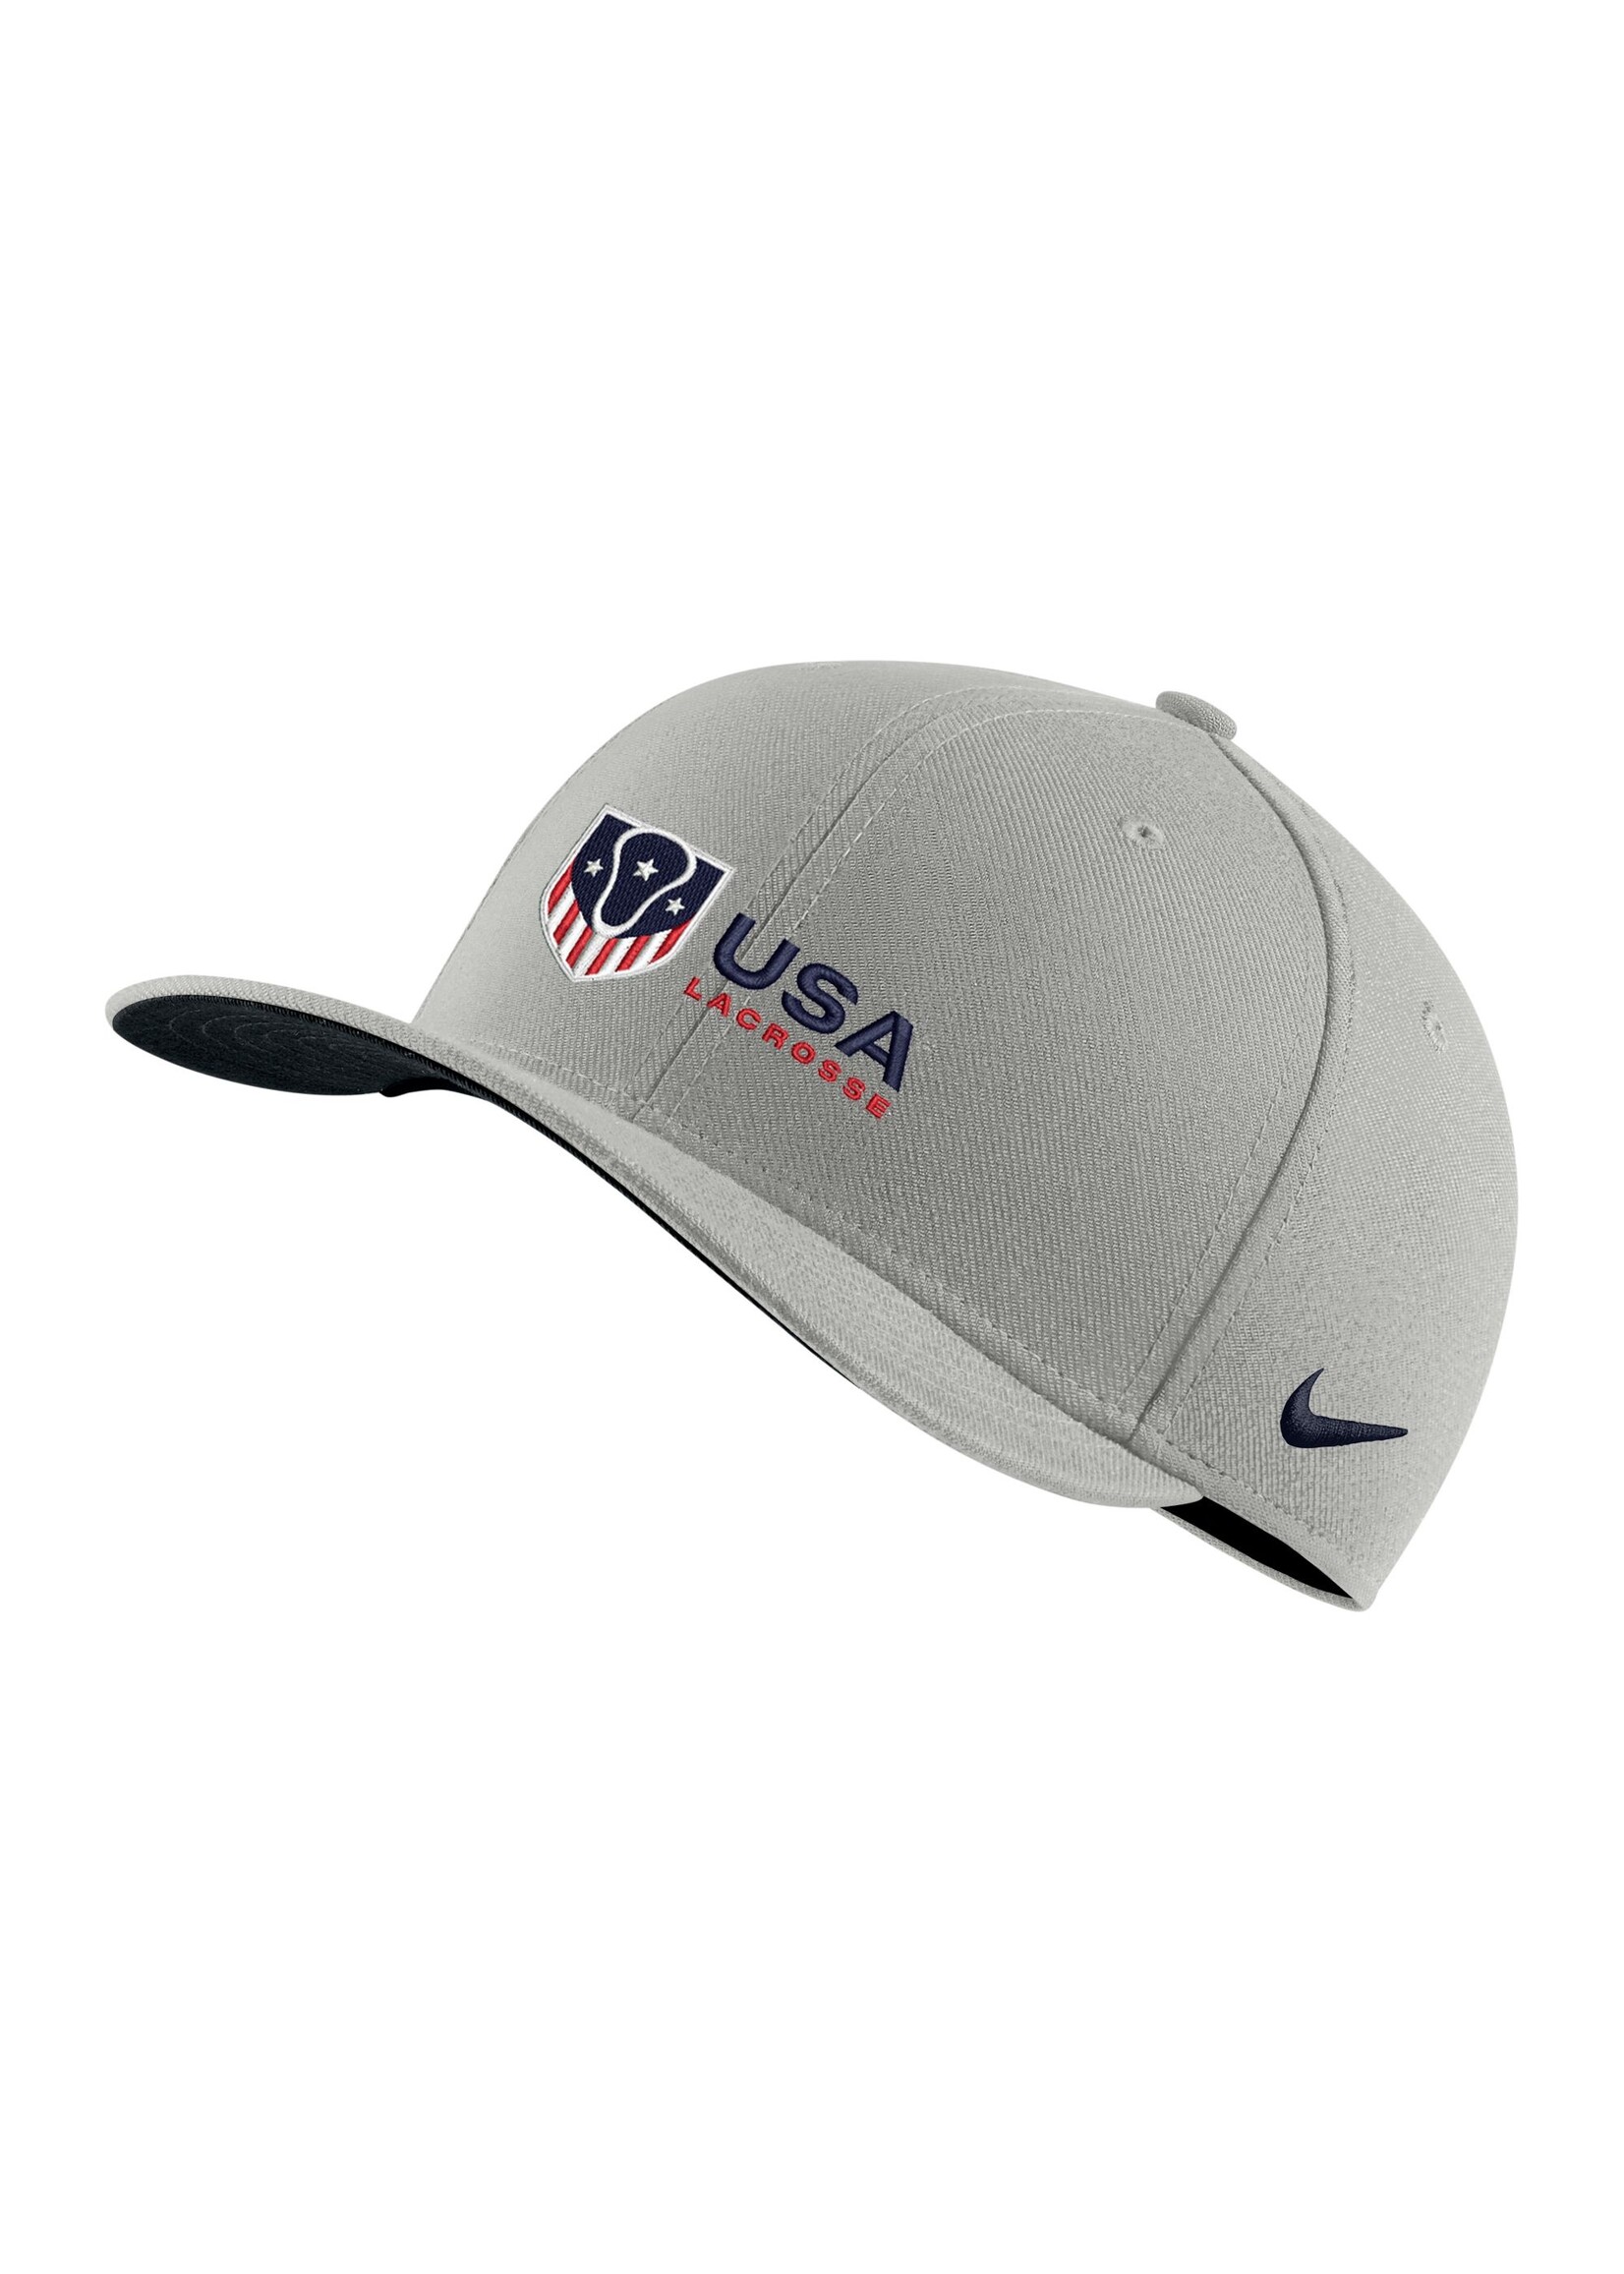 Nike Lacrosse Flex Fit Cap